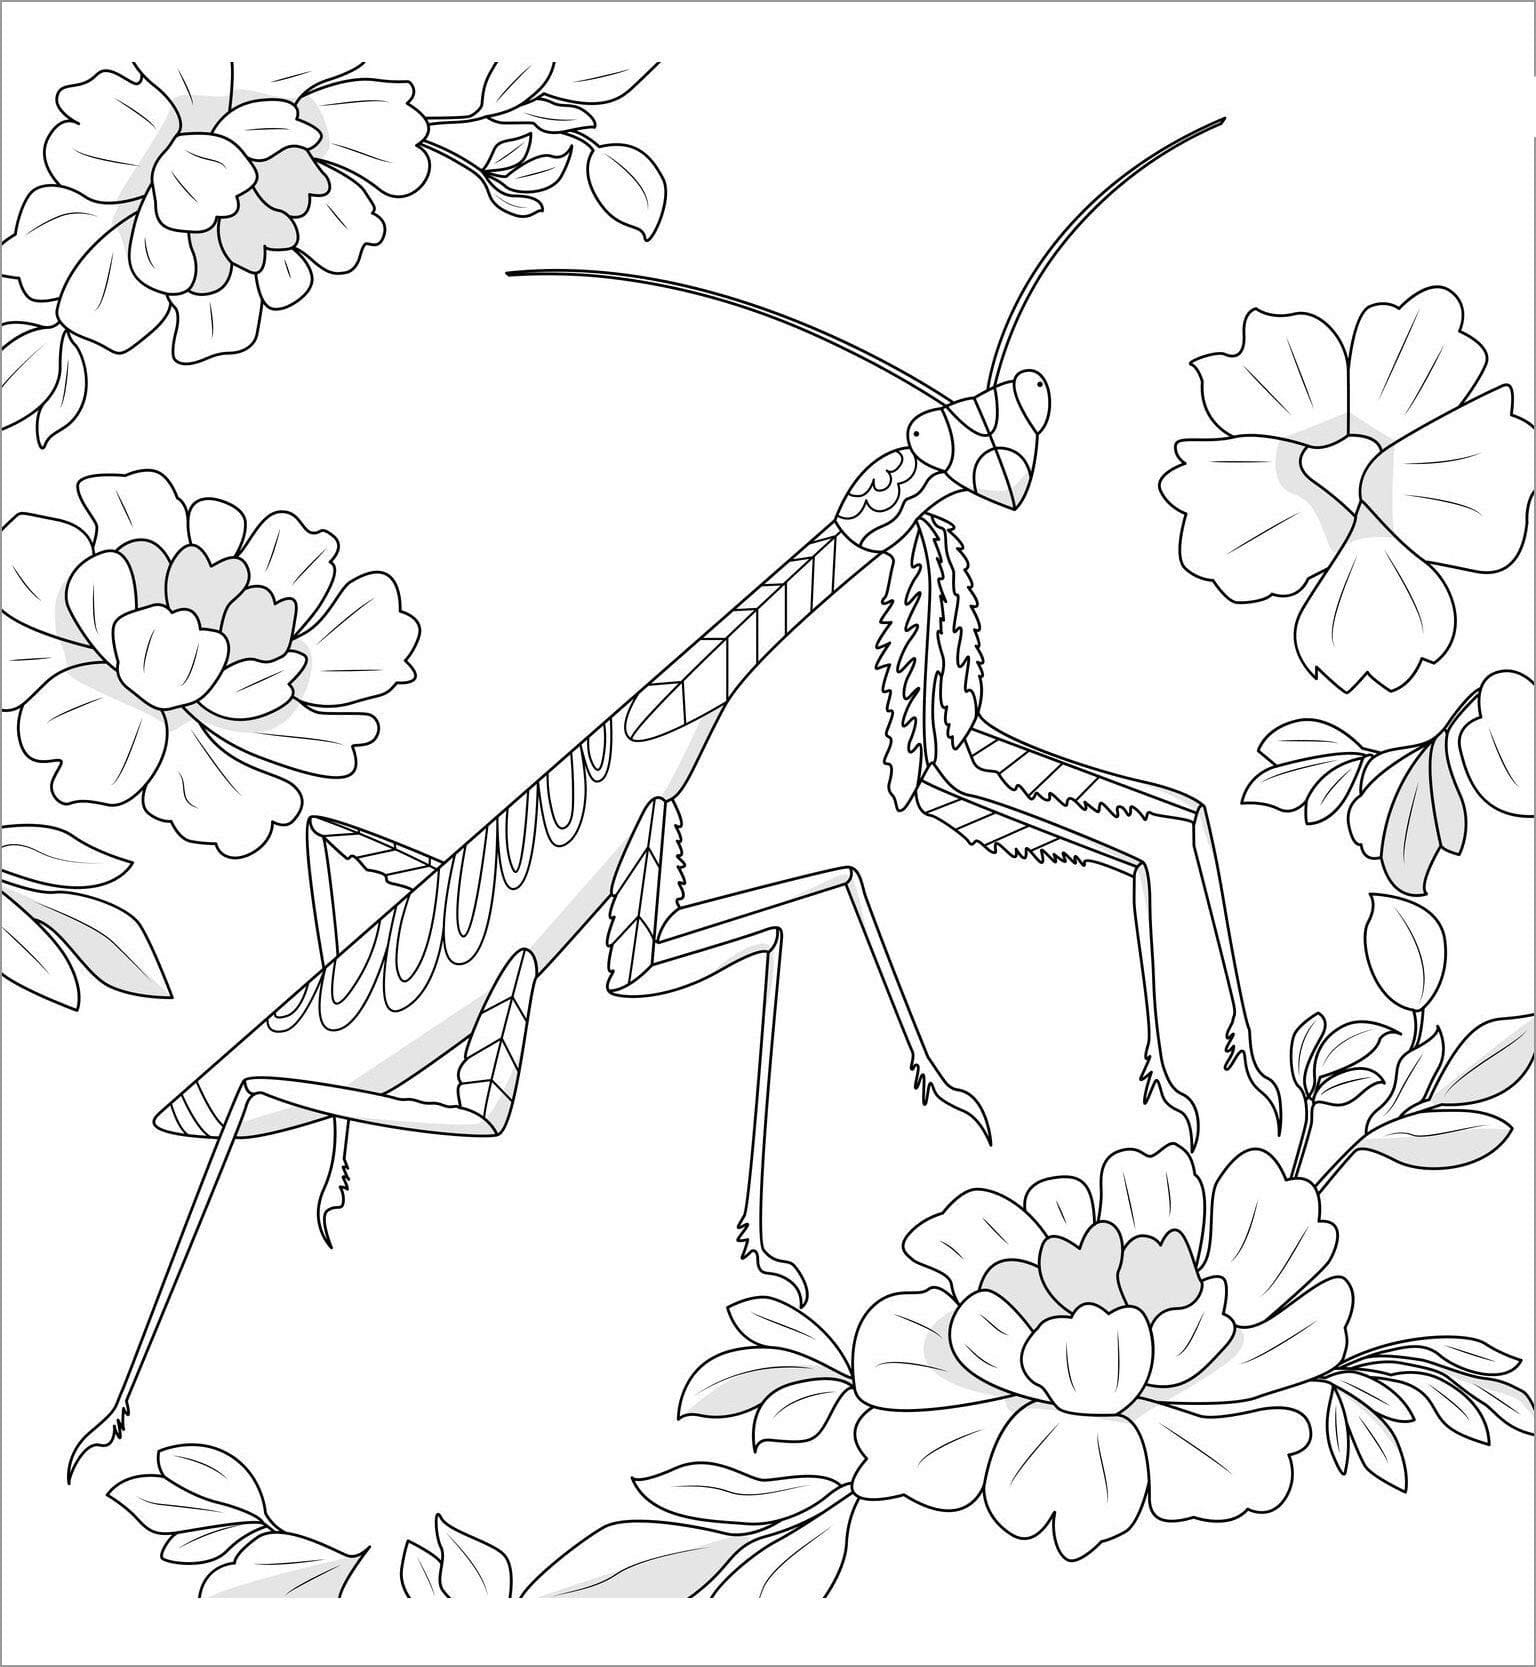 Free mantis image coloring page